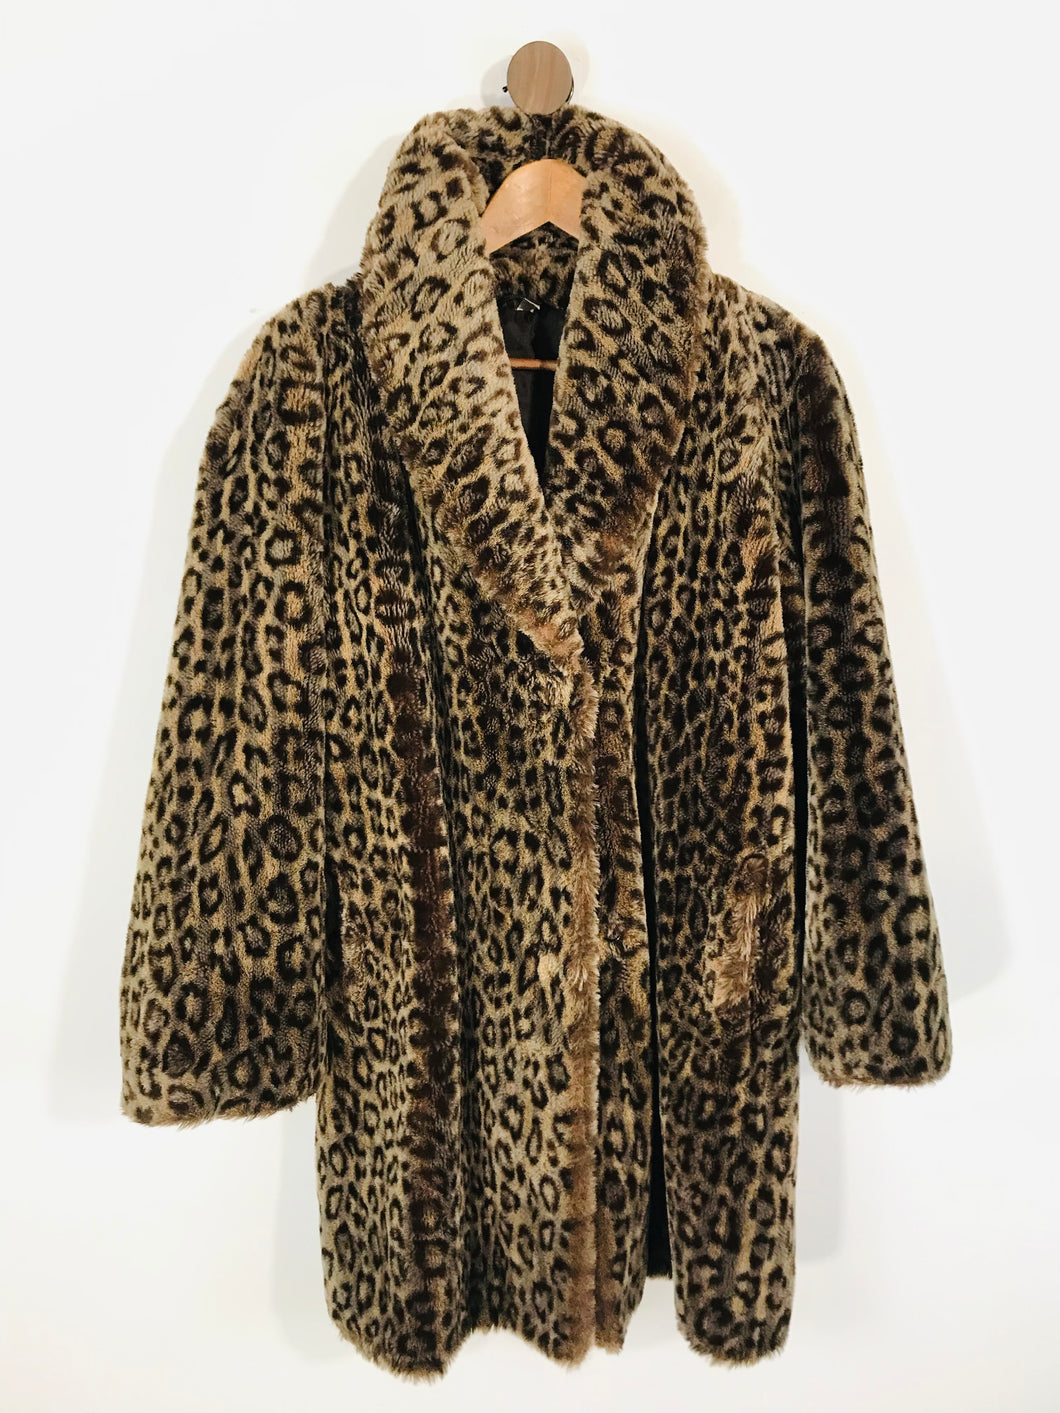 House of Fraser Women's Faux Fur Leopard Print Overcoat Coat | M UK10-12 | Brown